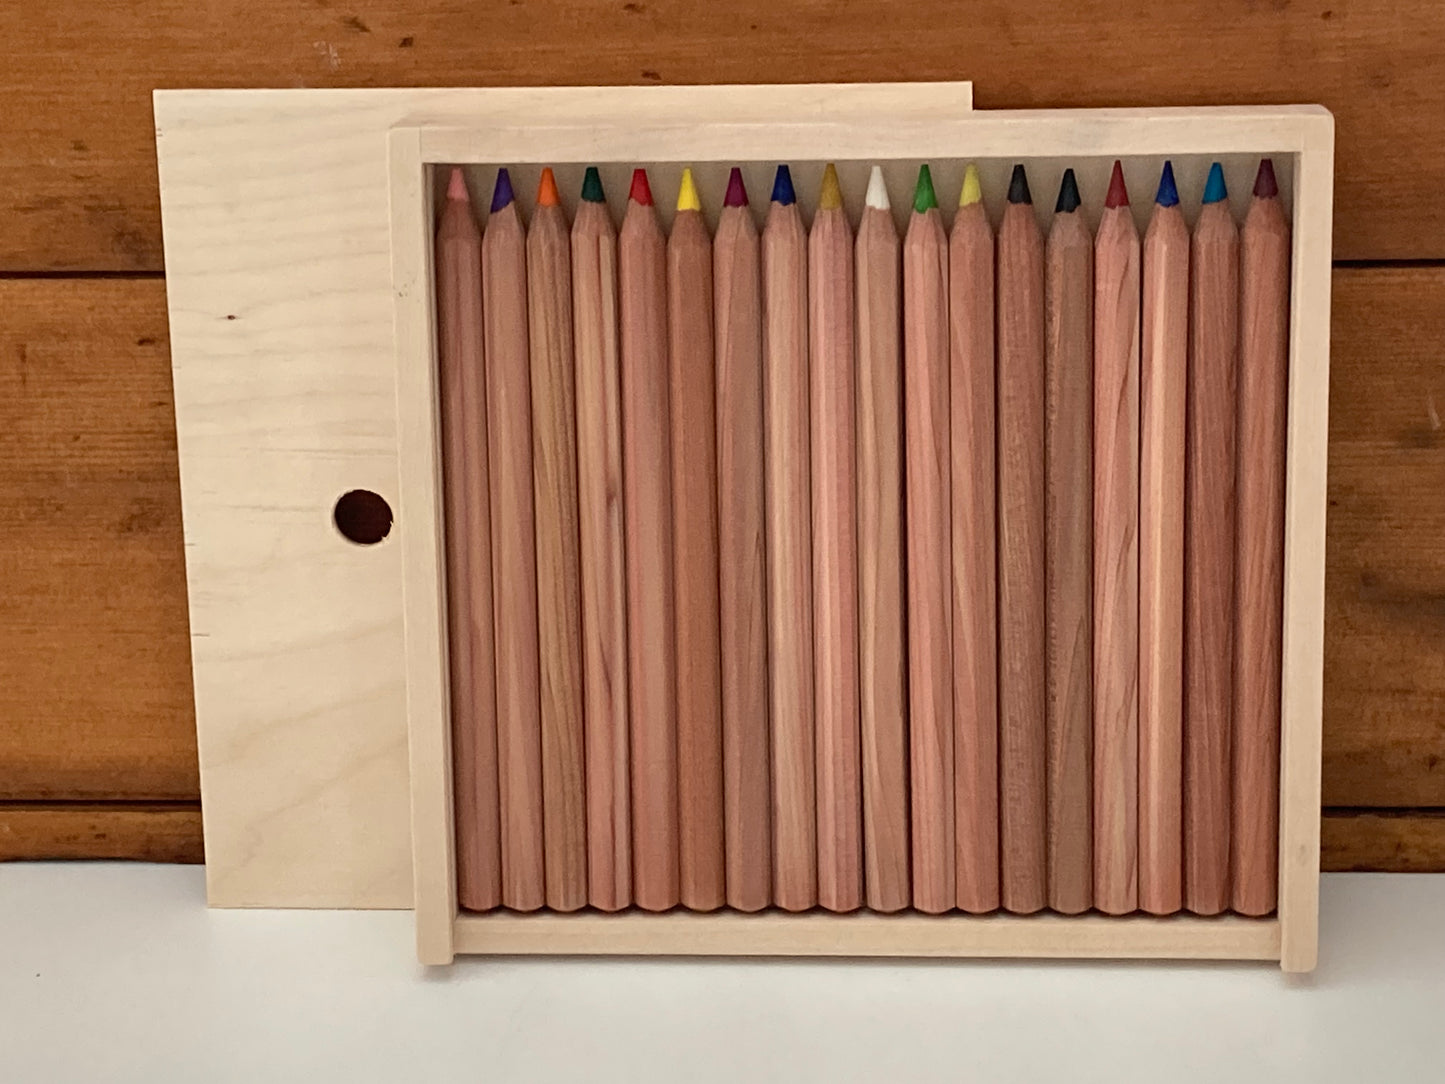 Colouring Pencils - YORIK PENCILS in a Wooden Box, 18 colours!